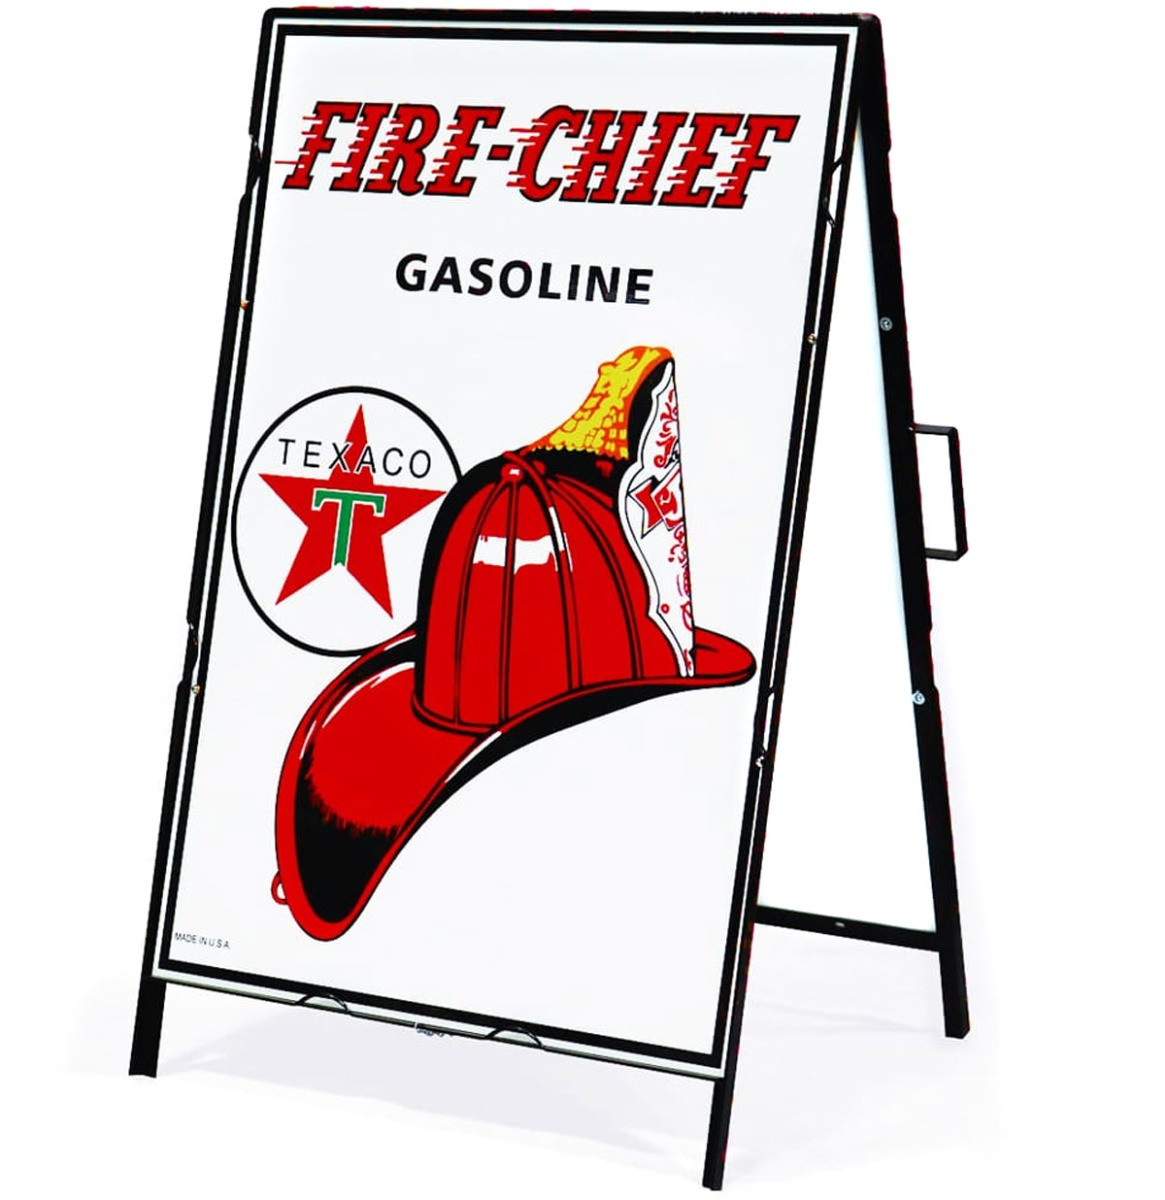 Texaco Fire Chief Gasoline Metalen Frame Met Bord